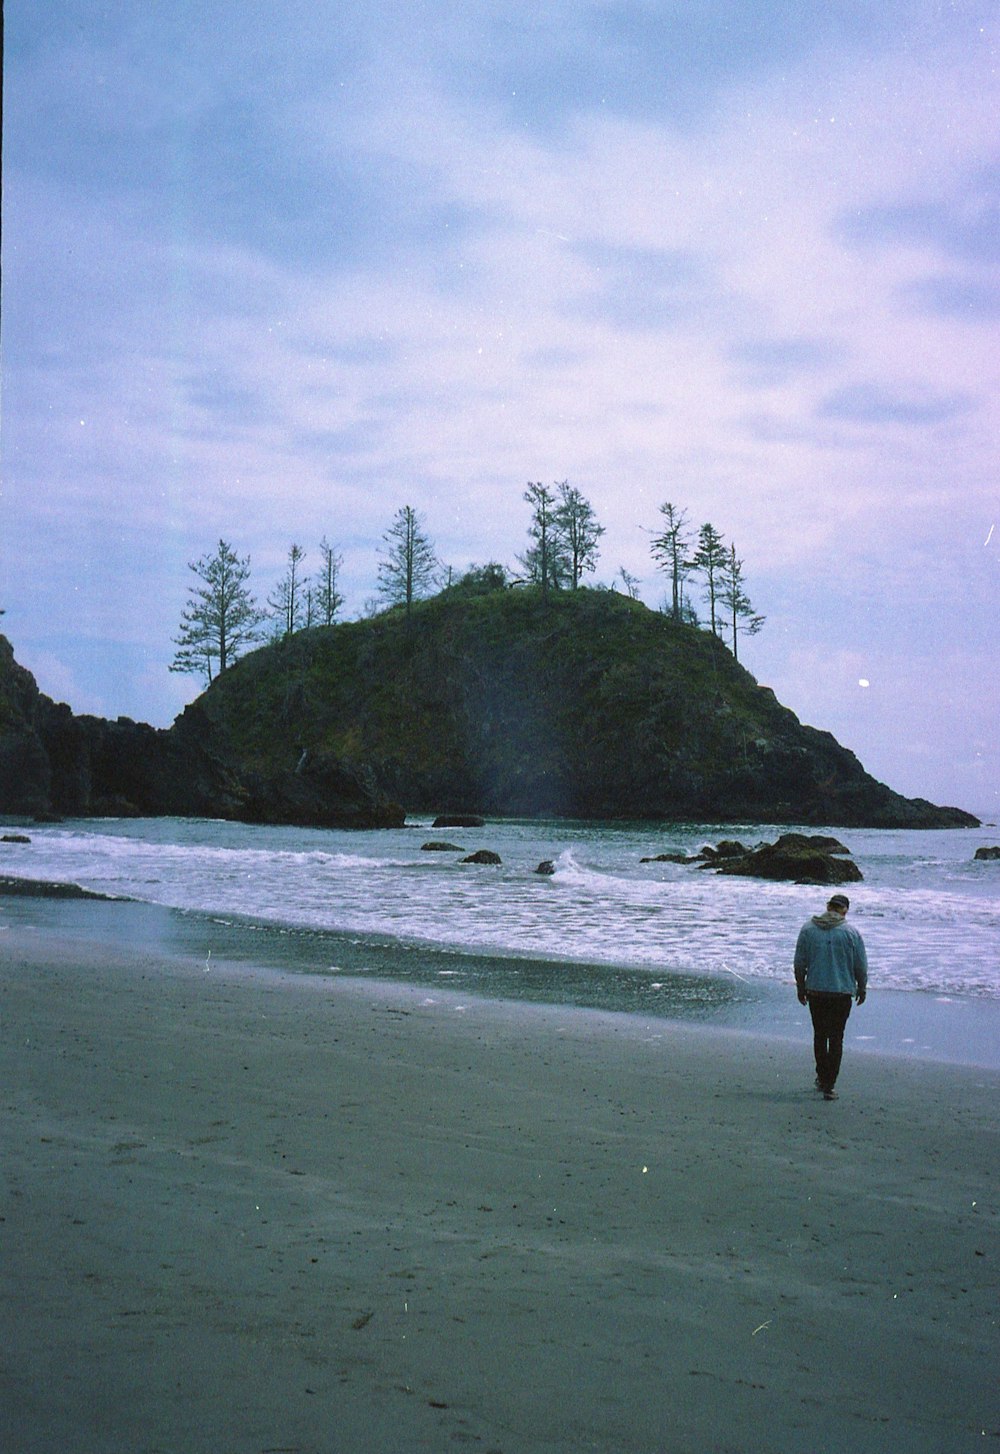 man in green shirt standing on seashore during daytime